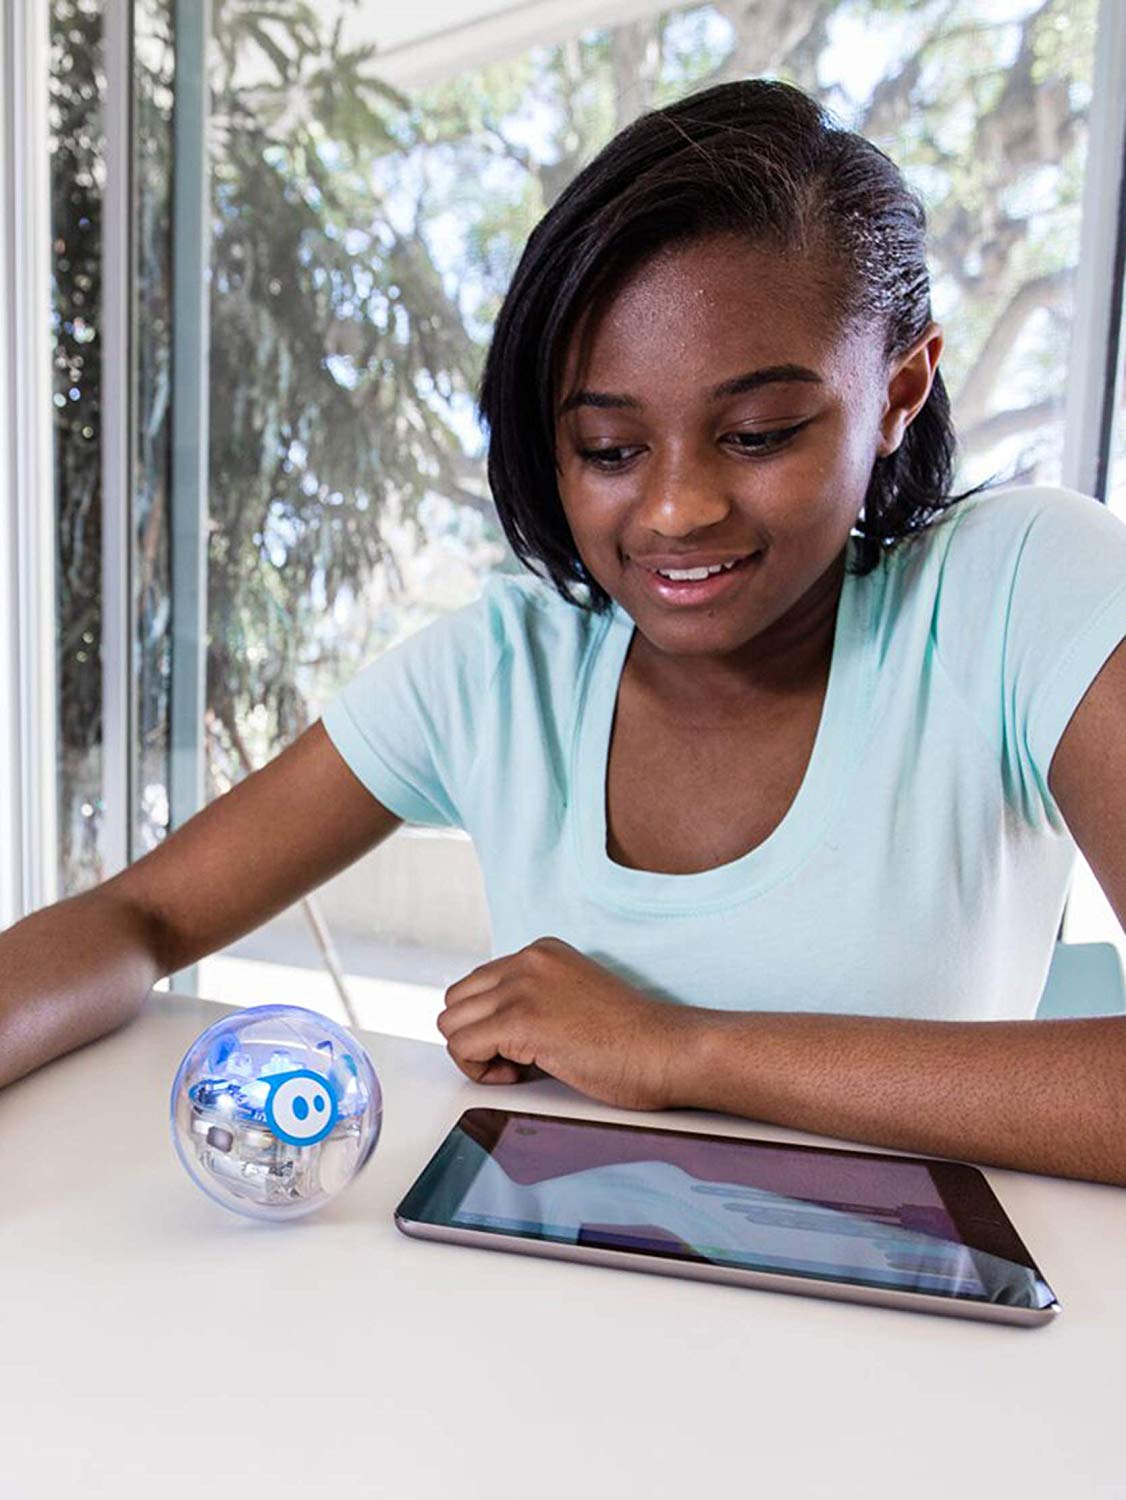 Sphero SPRK+: App-Enabled Robot Ball with Programmable Sensors + LED Lights  - STEM Educational Toy for Kids - Learn JavaScript, Scratch & Swift